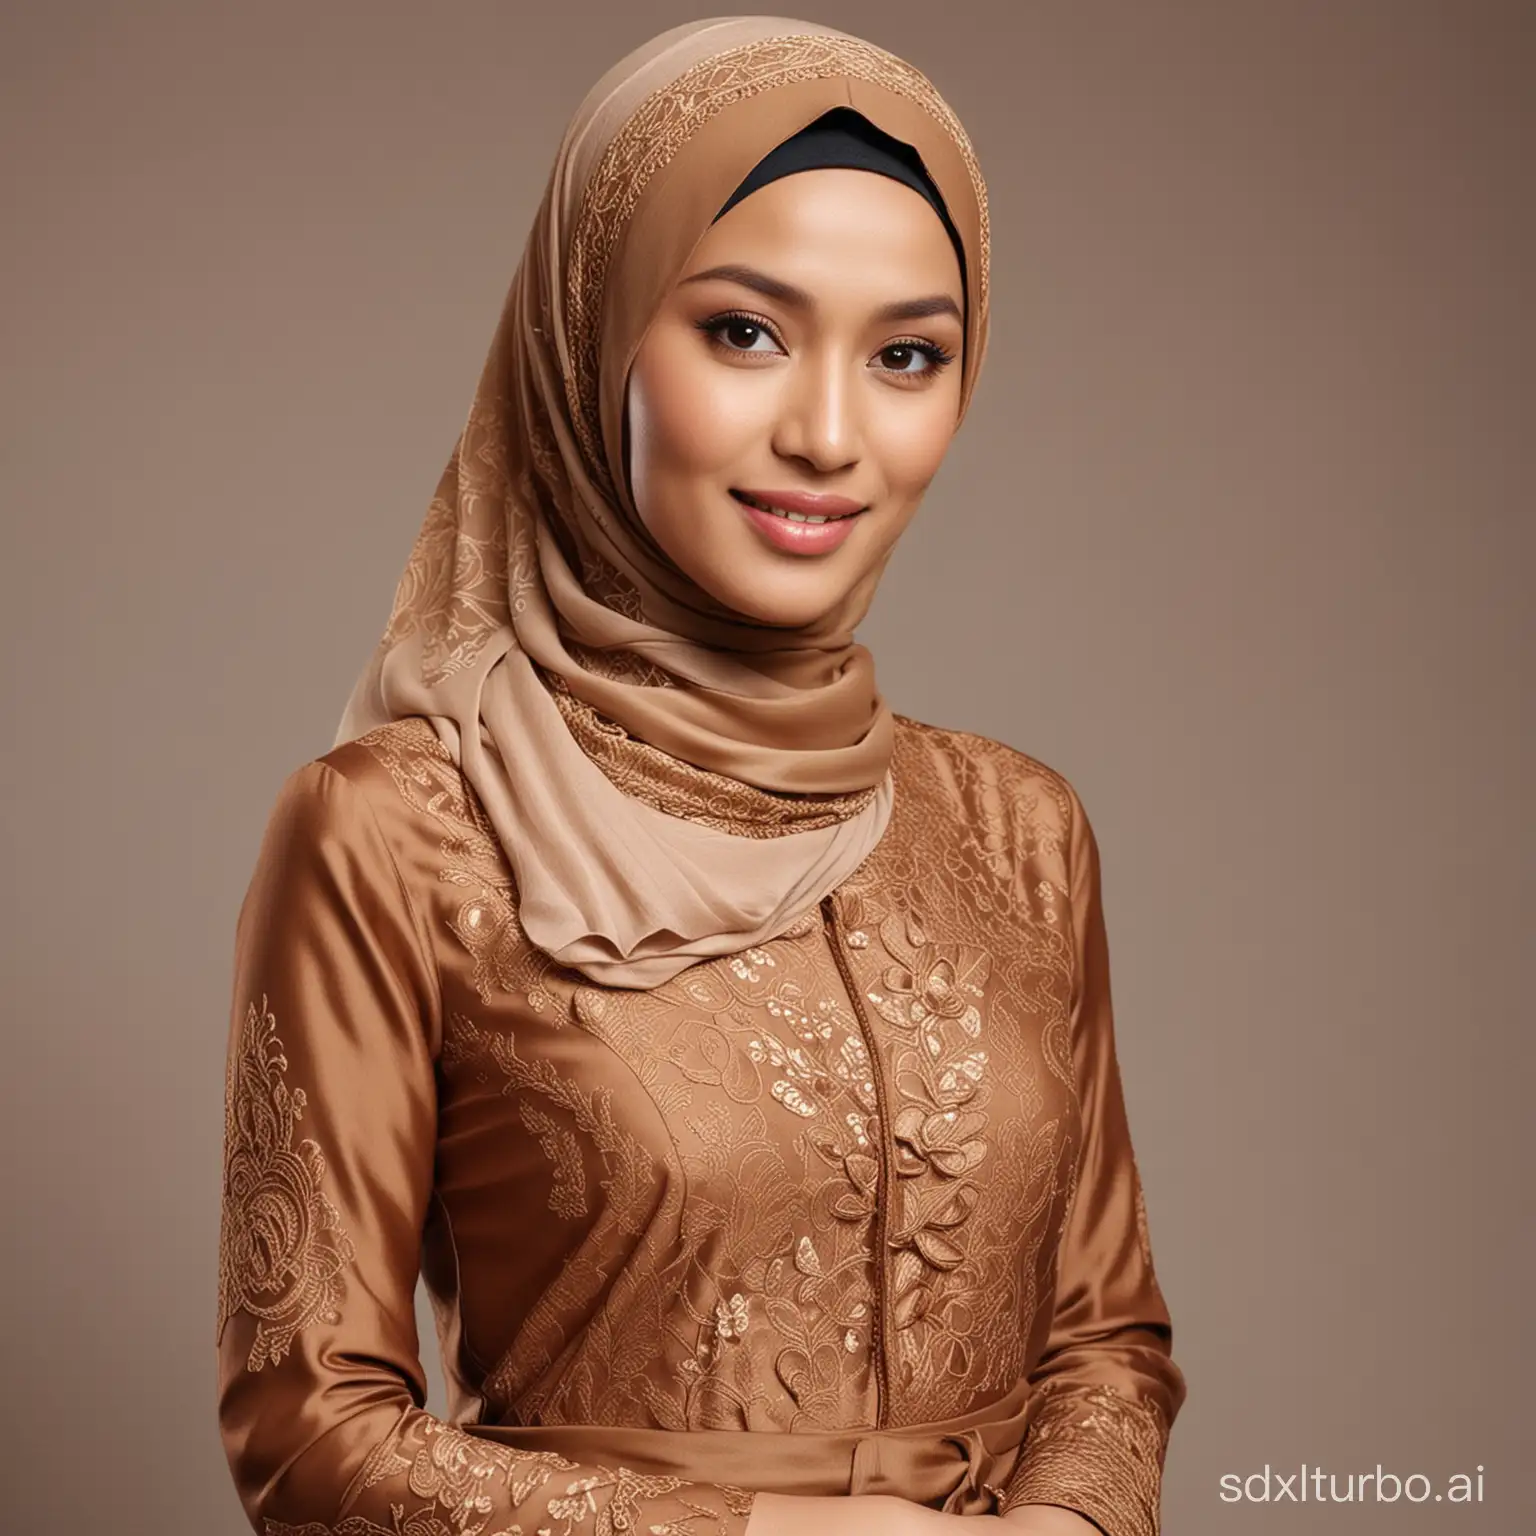 Ra Kartini versi hijab,denganemakai kebaya berwarna coklat susu dipadukan dengan rok warna coklat